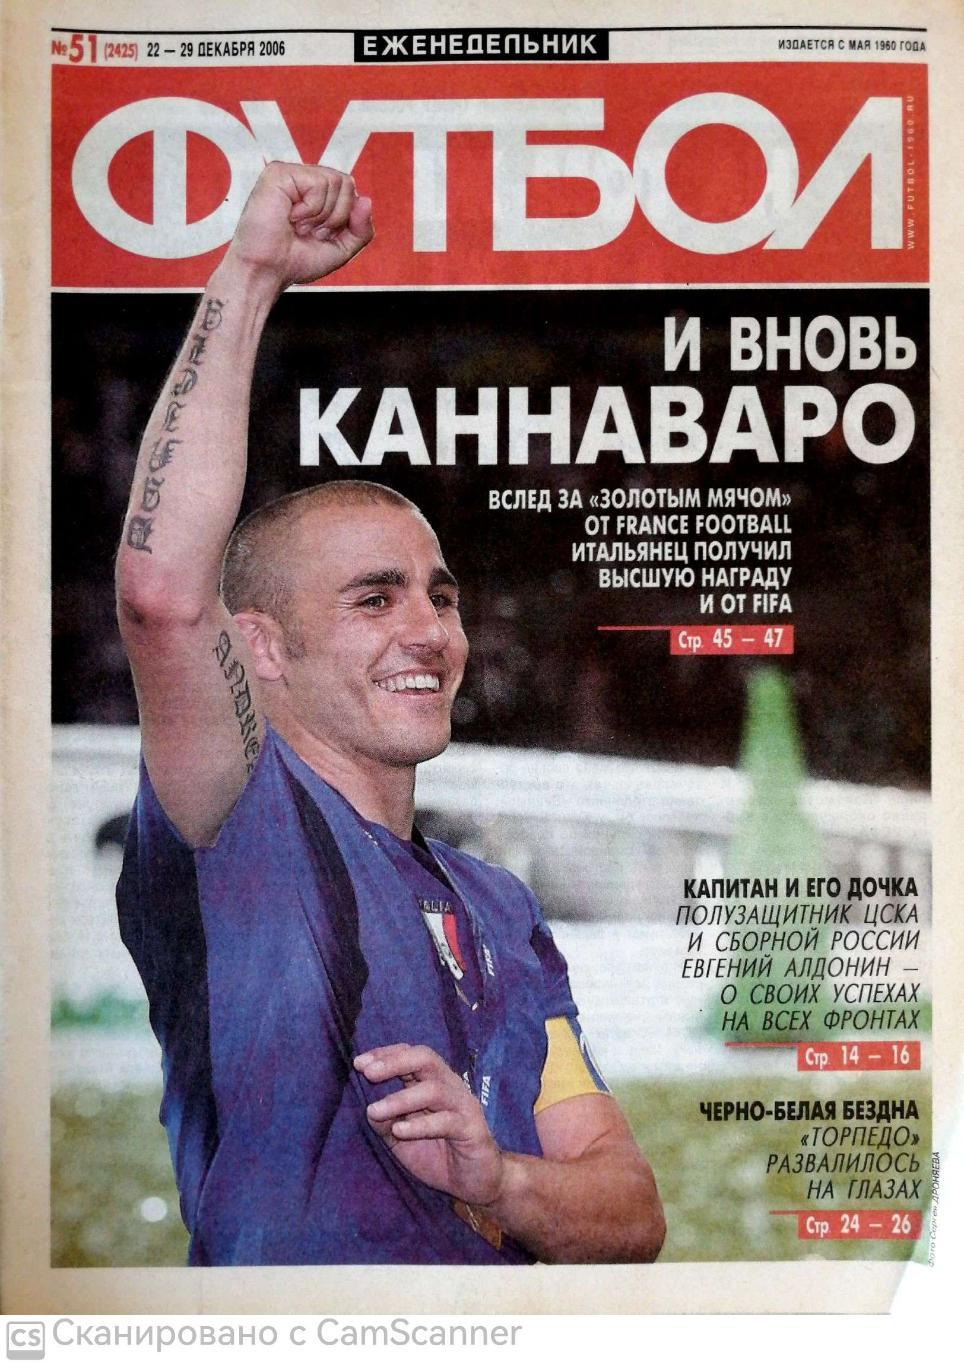 Еженедельник «Футбол» (Москва). 2006 год. №51